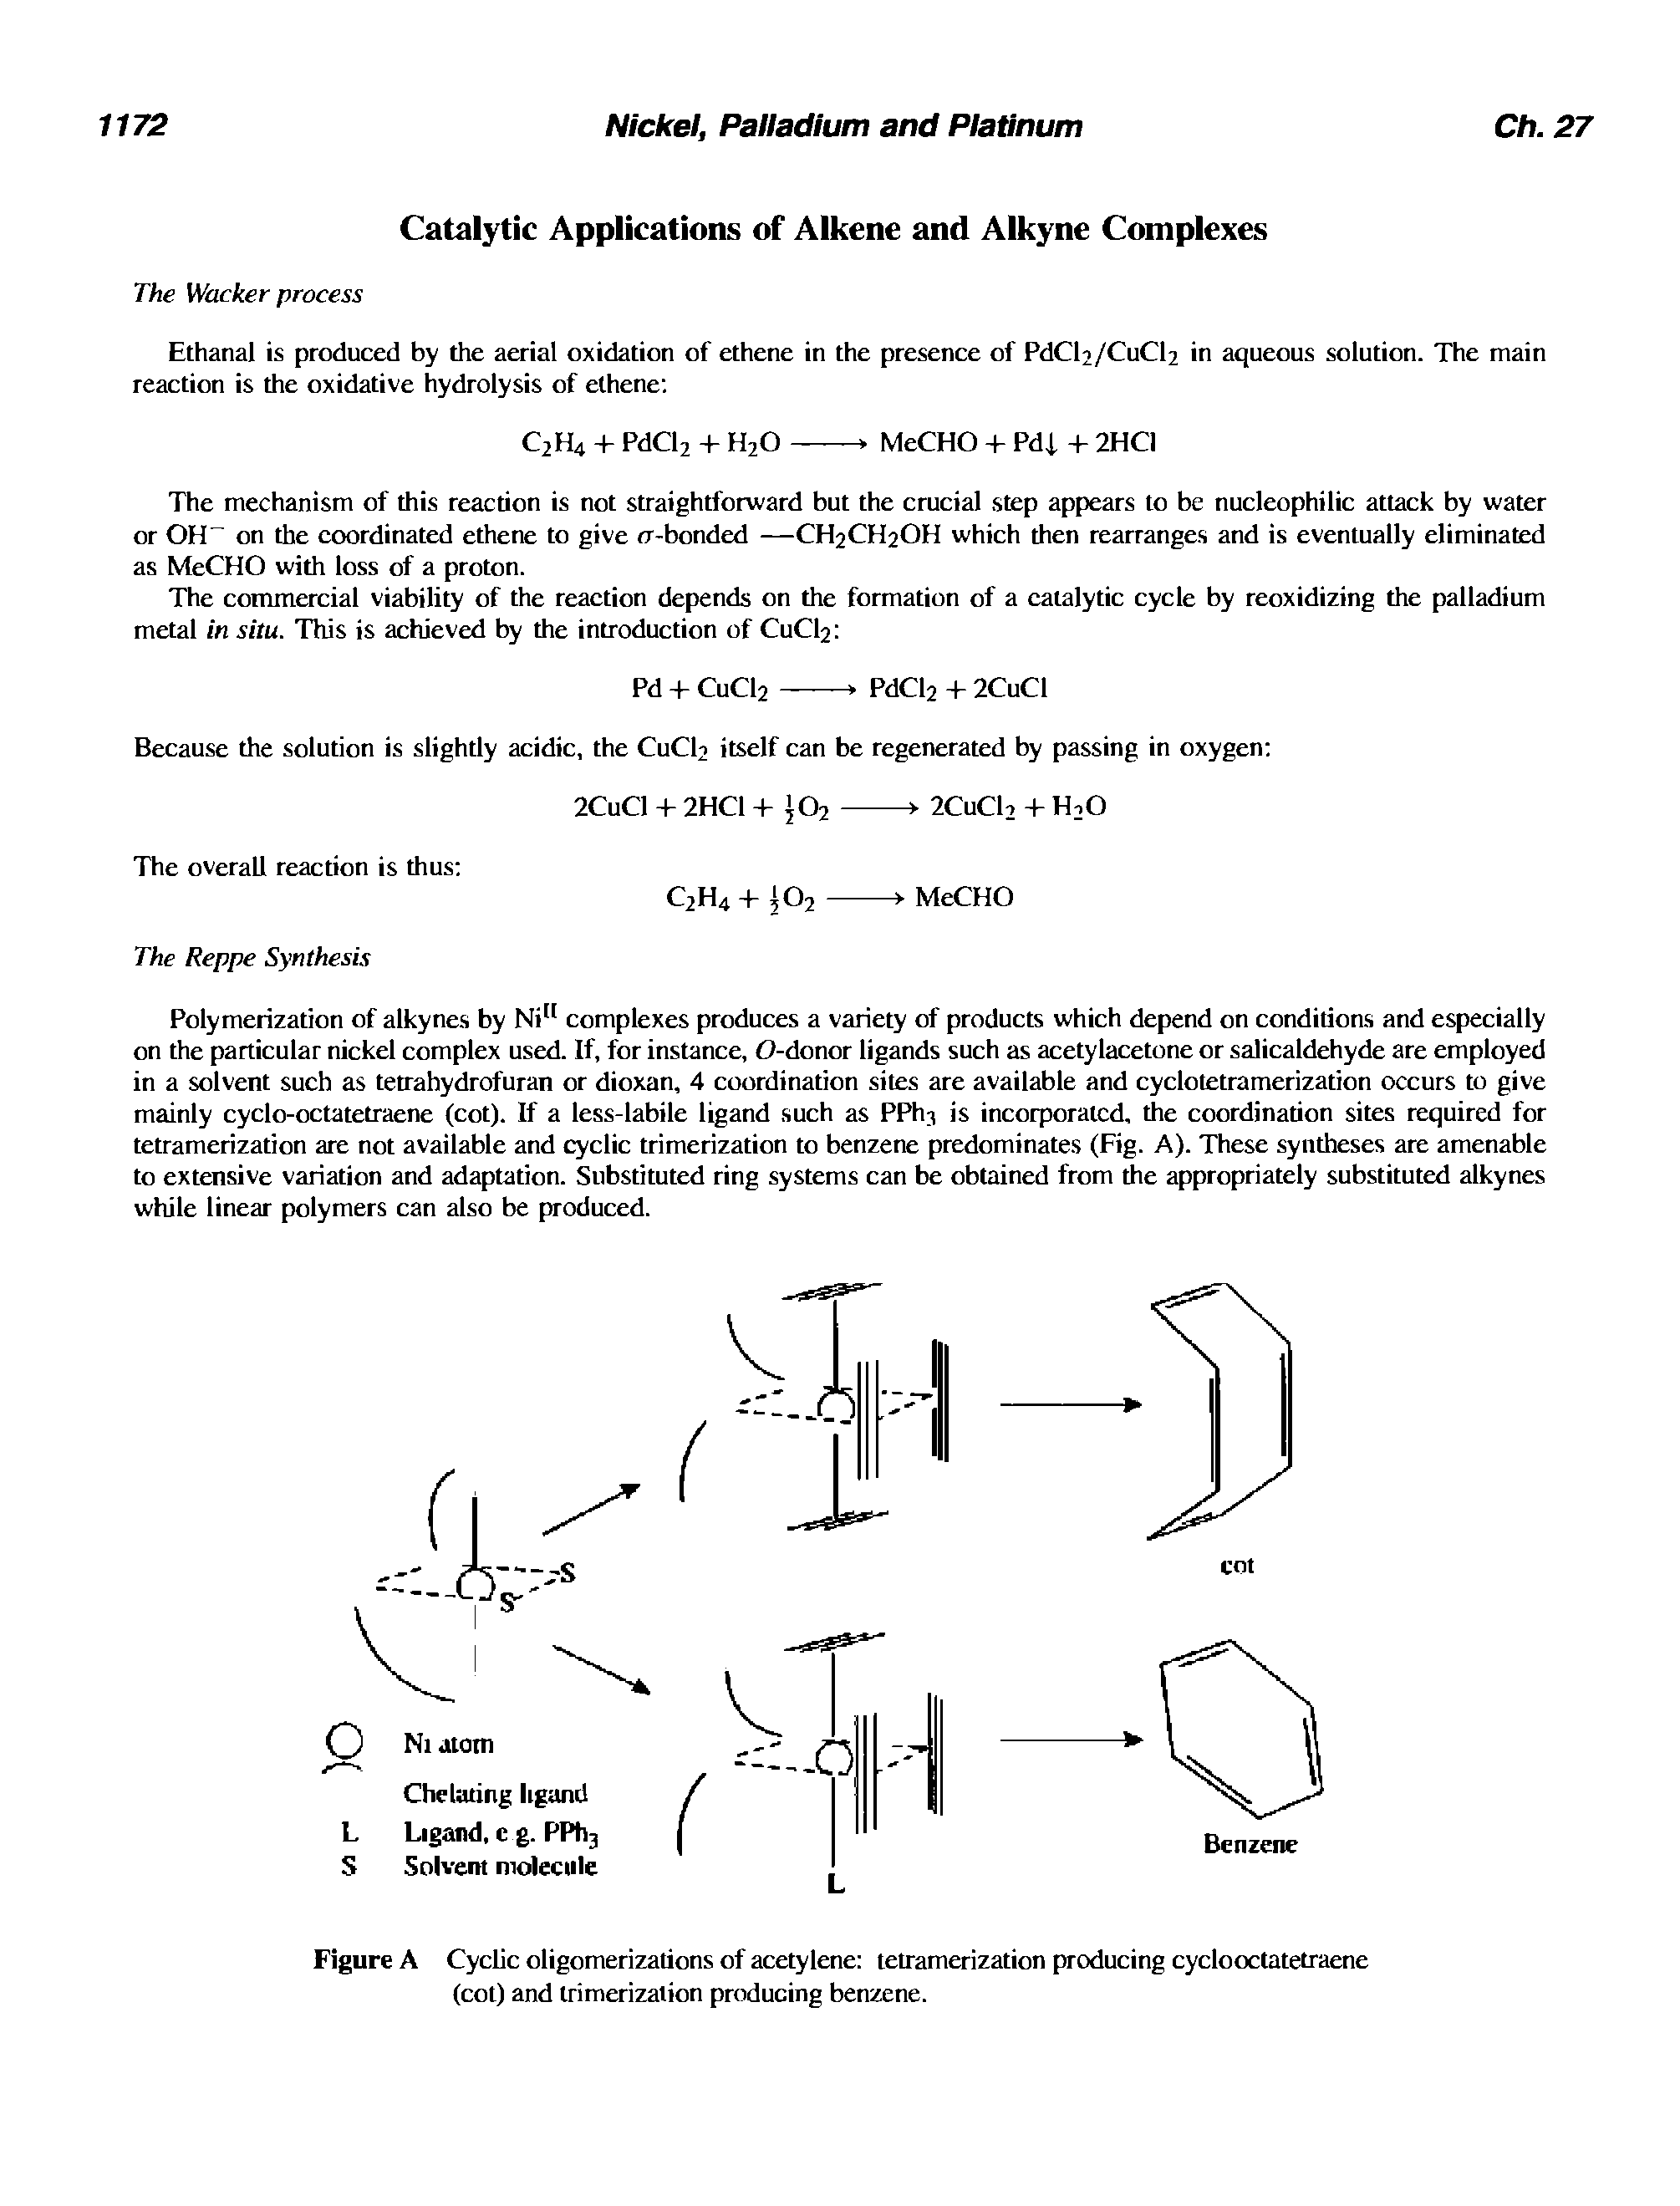 Figure A Cyclic oligomerizations of acetylene tetramerization producing cyclooctatetraene (cot) and trimerization producing benzene.